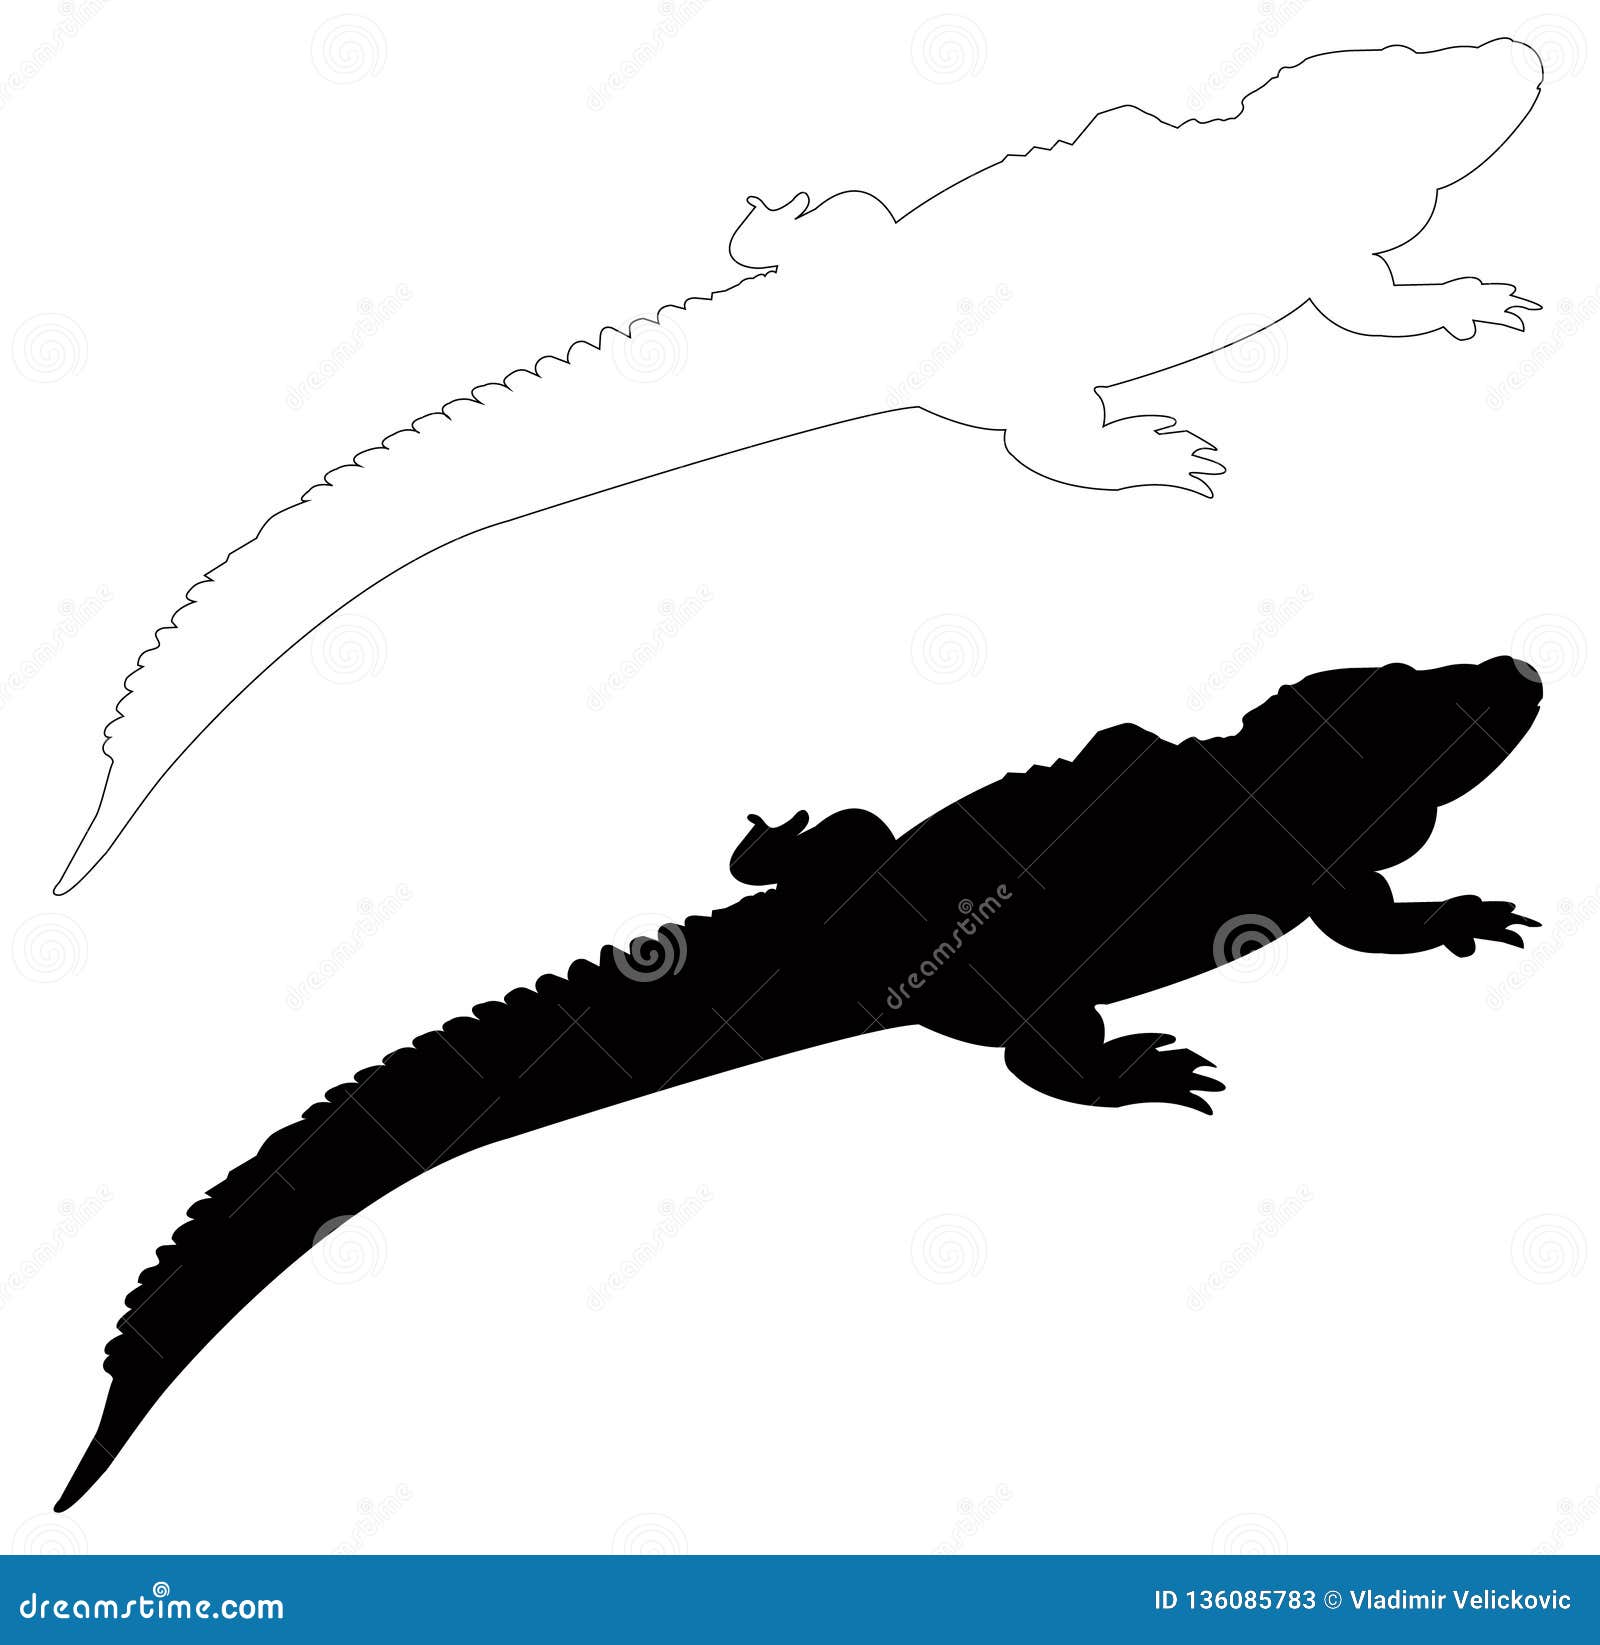 alligator silhouette - crocodilian in the genus alligator of the family alligatoridae